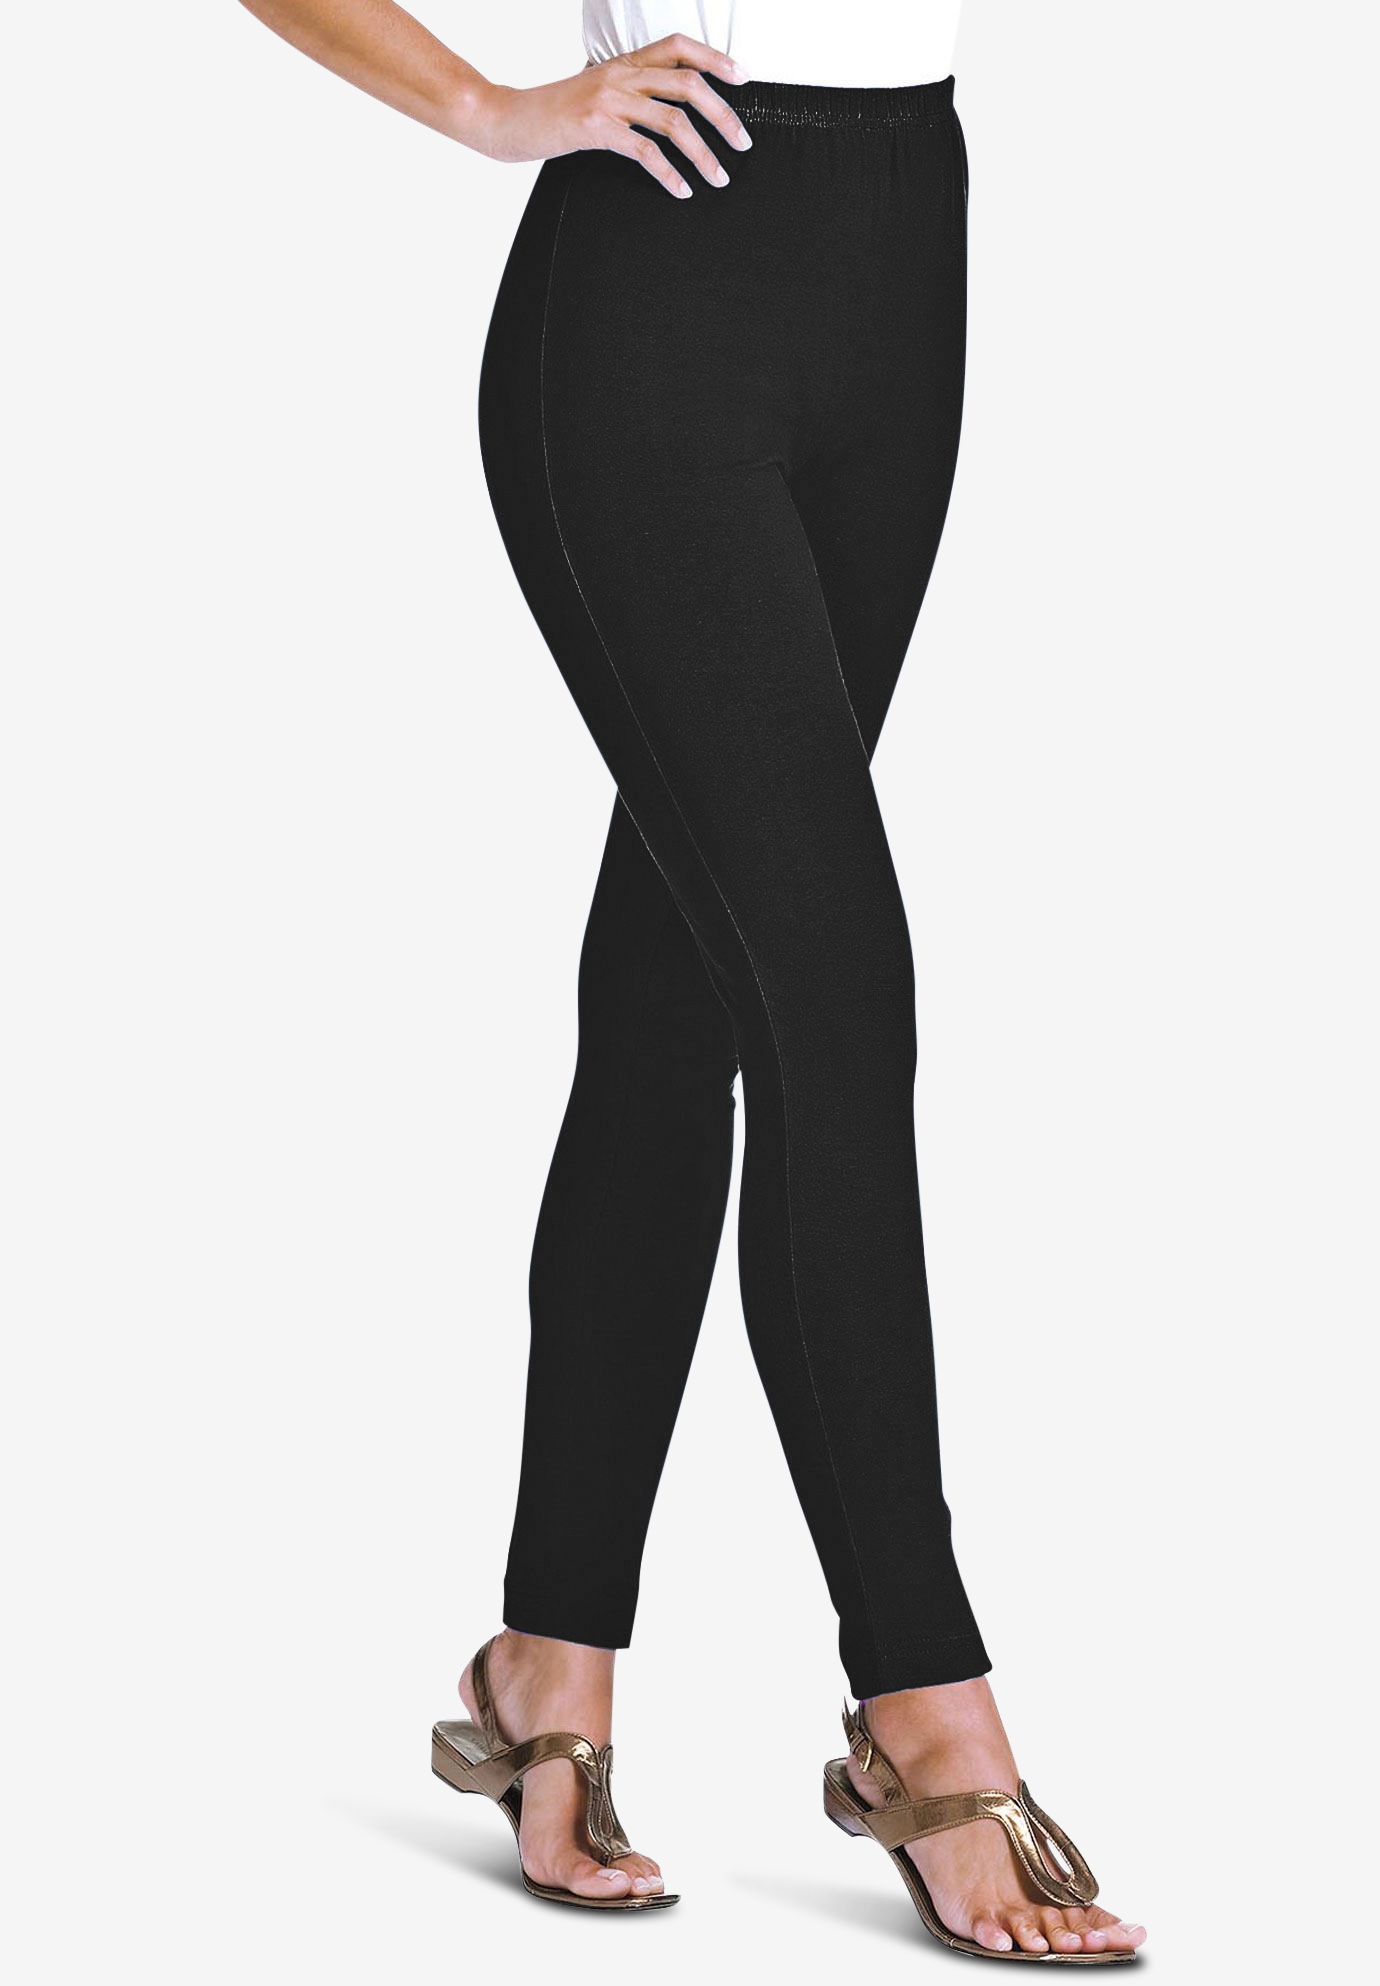 Heather Gray Womens Plus Size Full Length Cotton Leggings Size X-Large -  Walmart.com